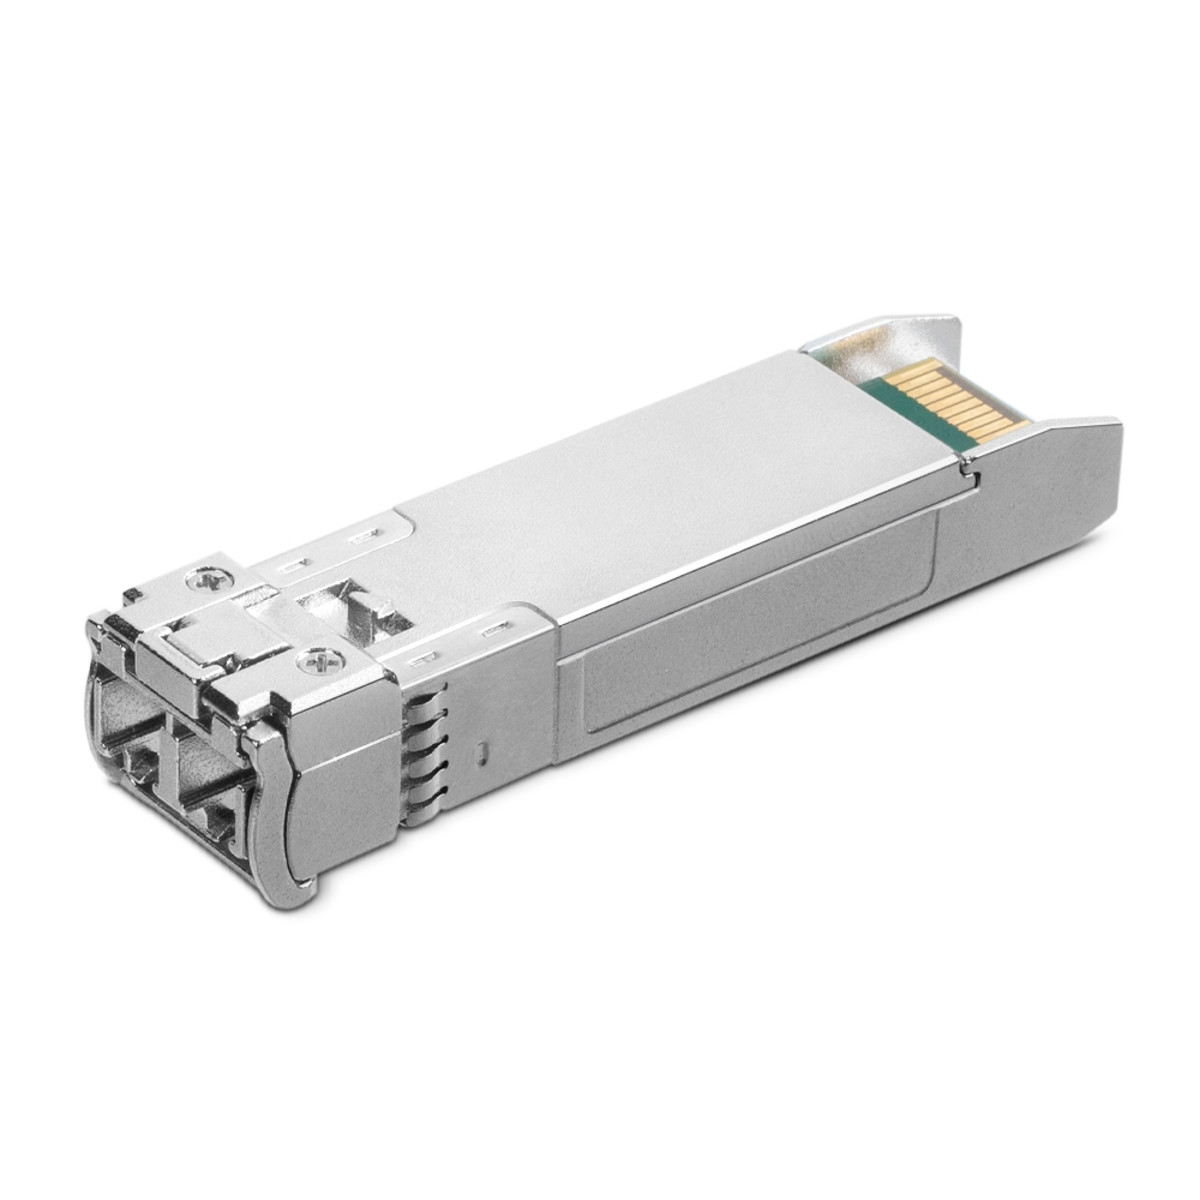 10GBase-LR SFP+ LC Transceiver